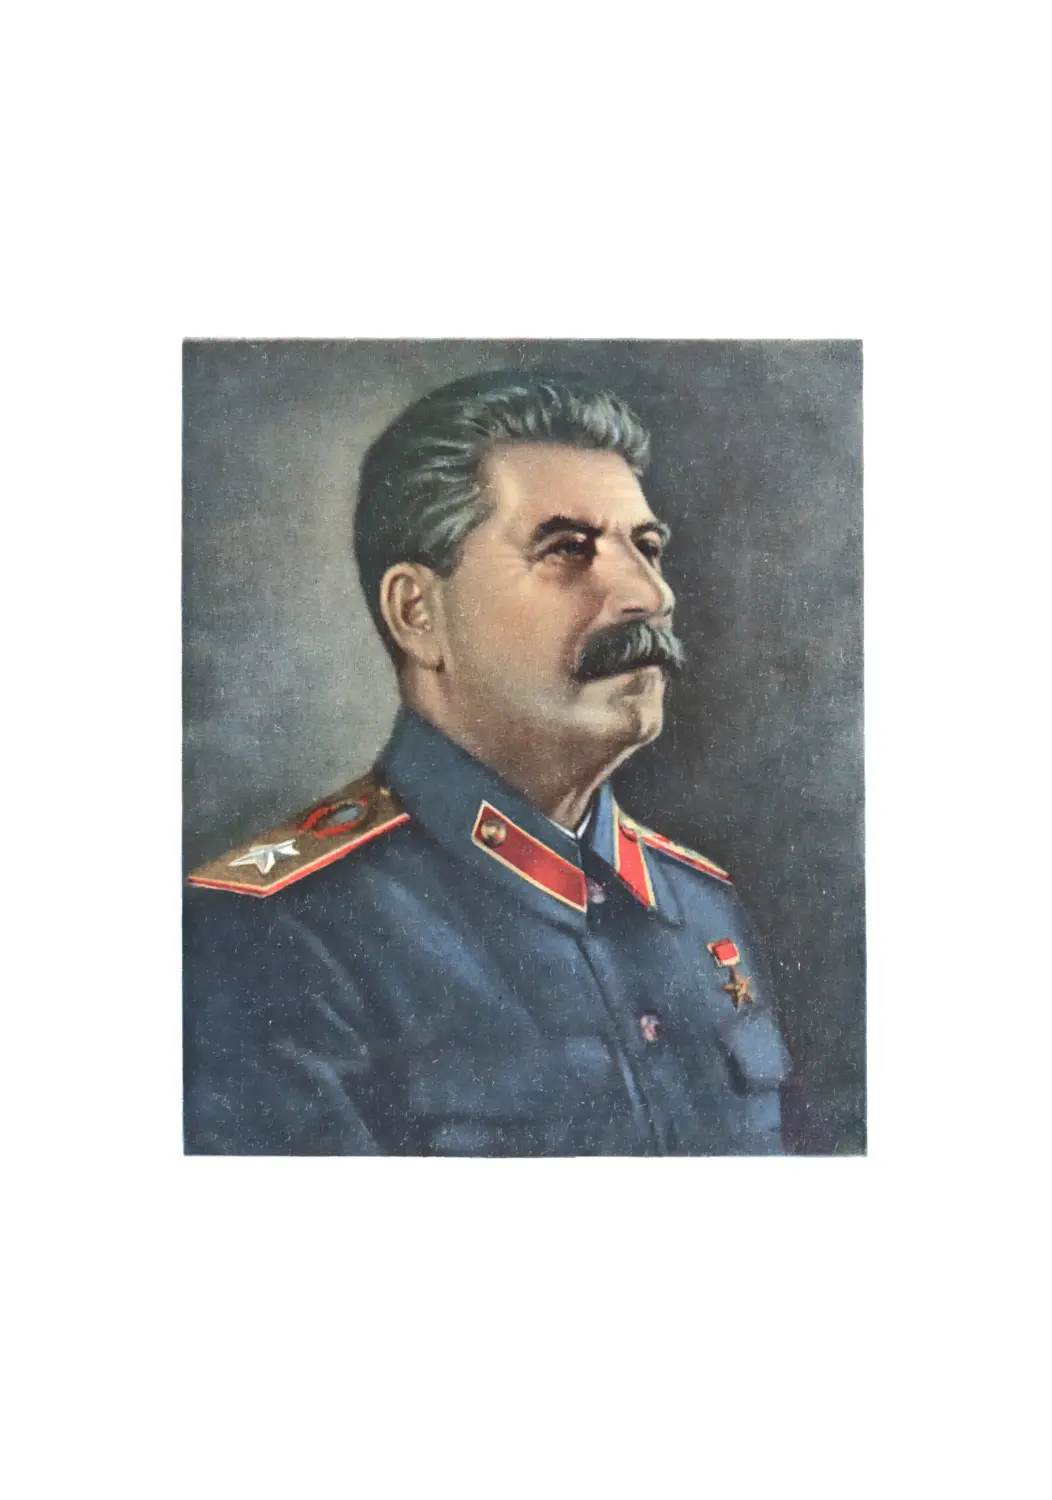 Вклейка. Иосиф Виссарионович Сталин